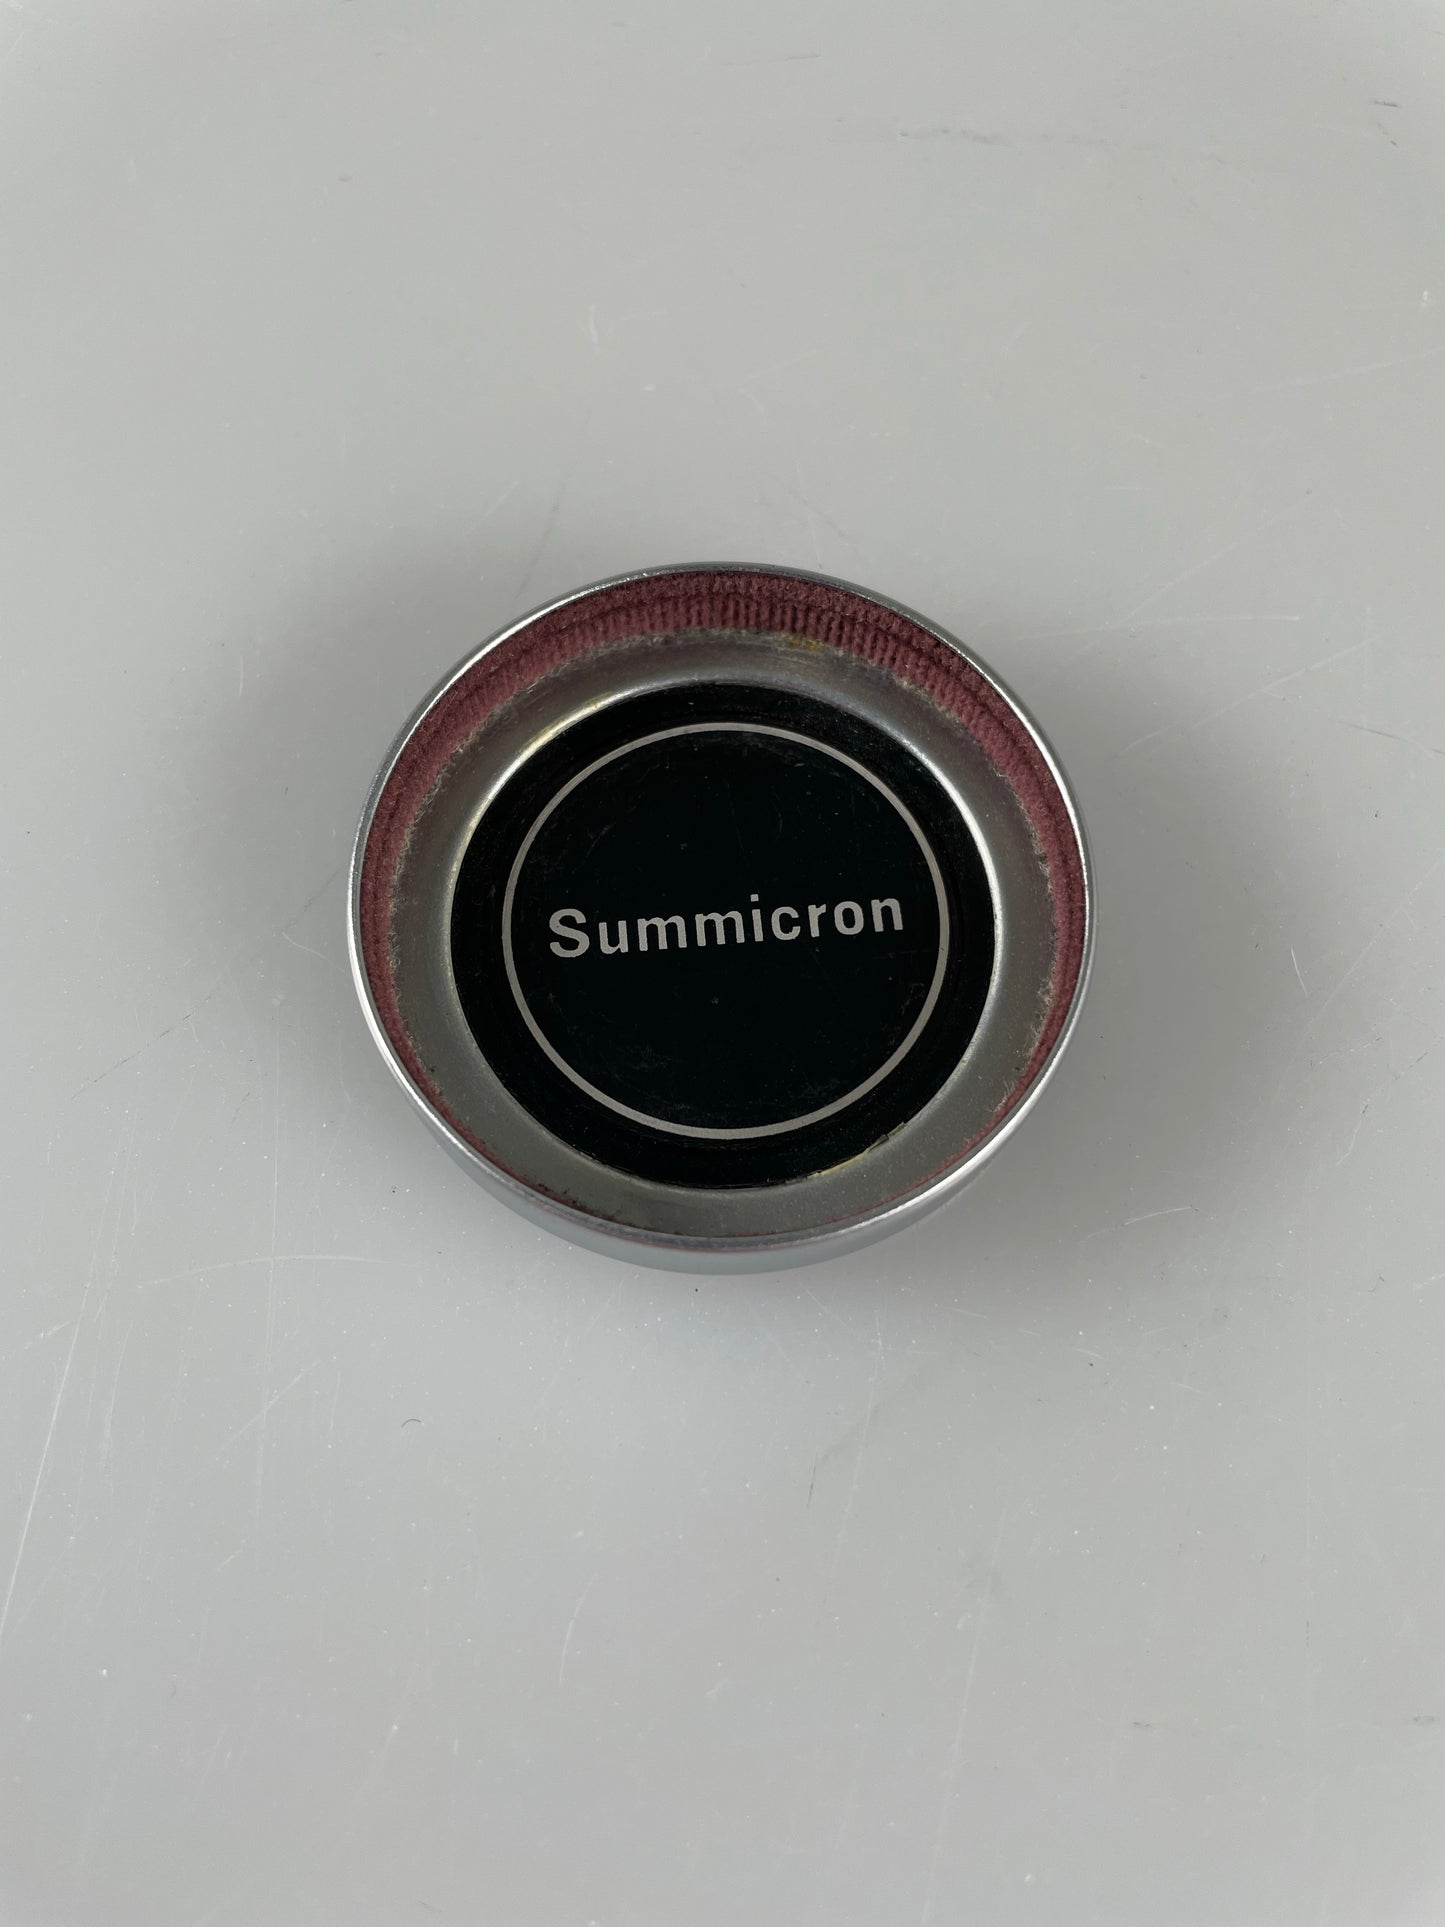 RARE LEICA SUMMICRON 50mm f2 LENS CHROME CAP WITH SUMMICRON INSIDE